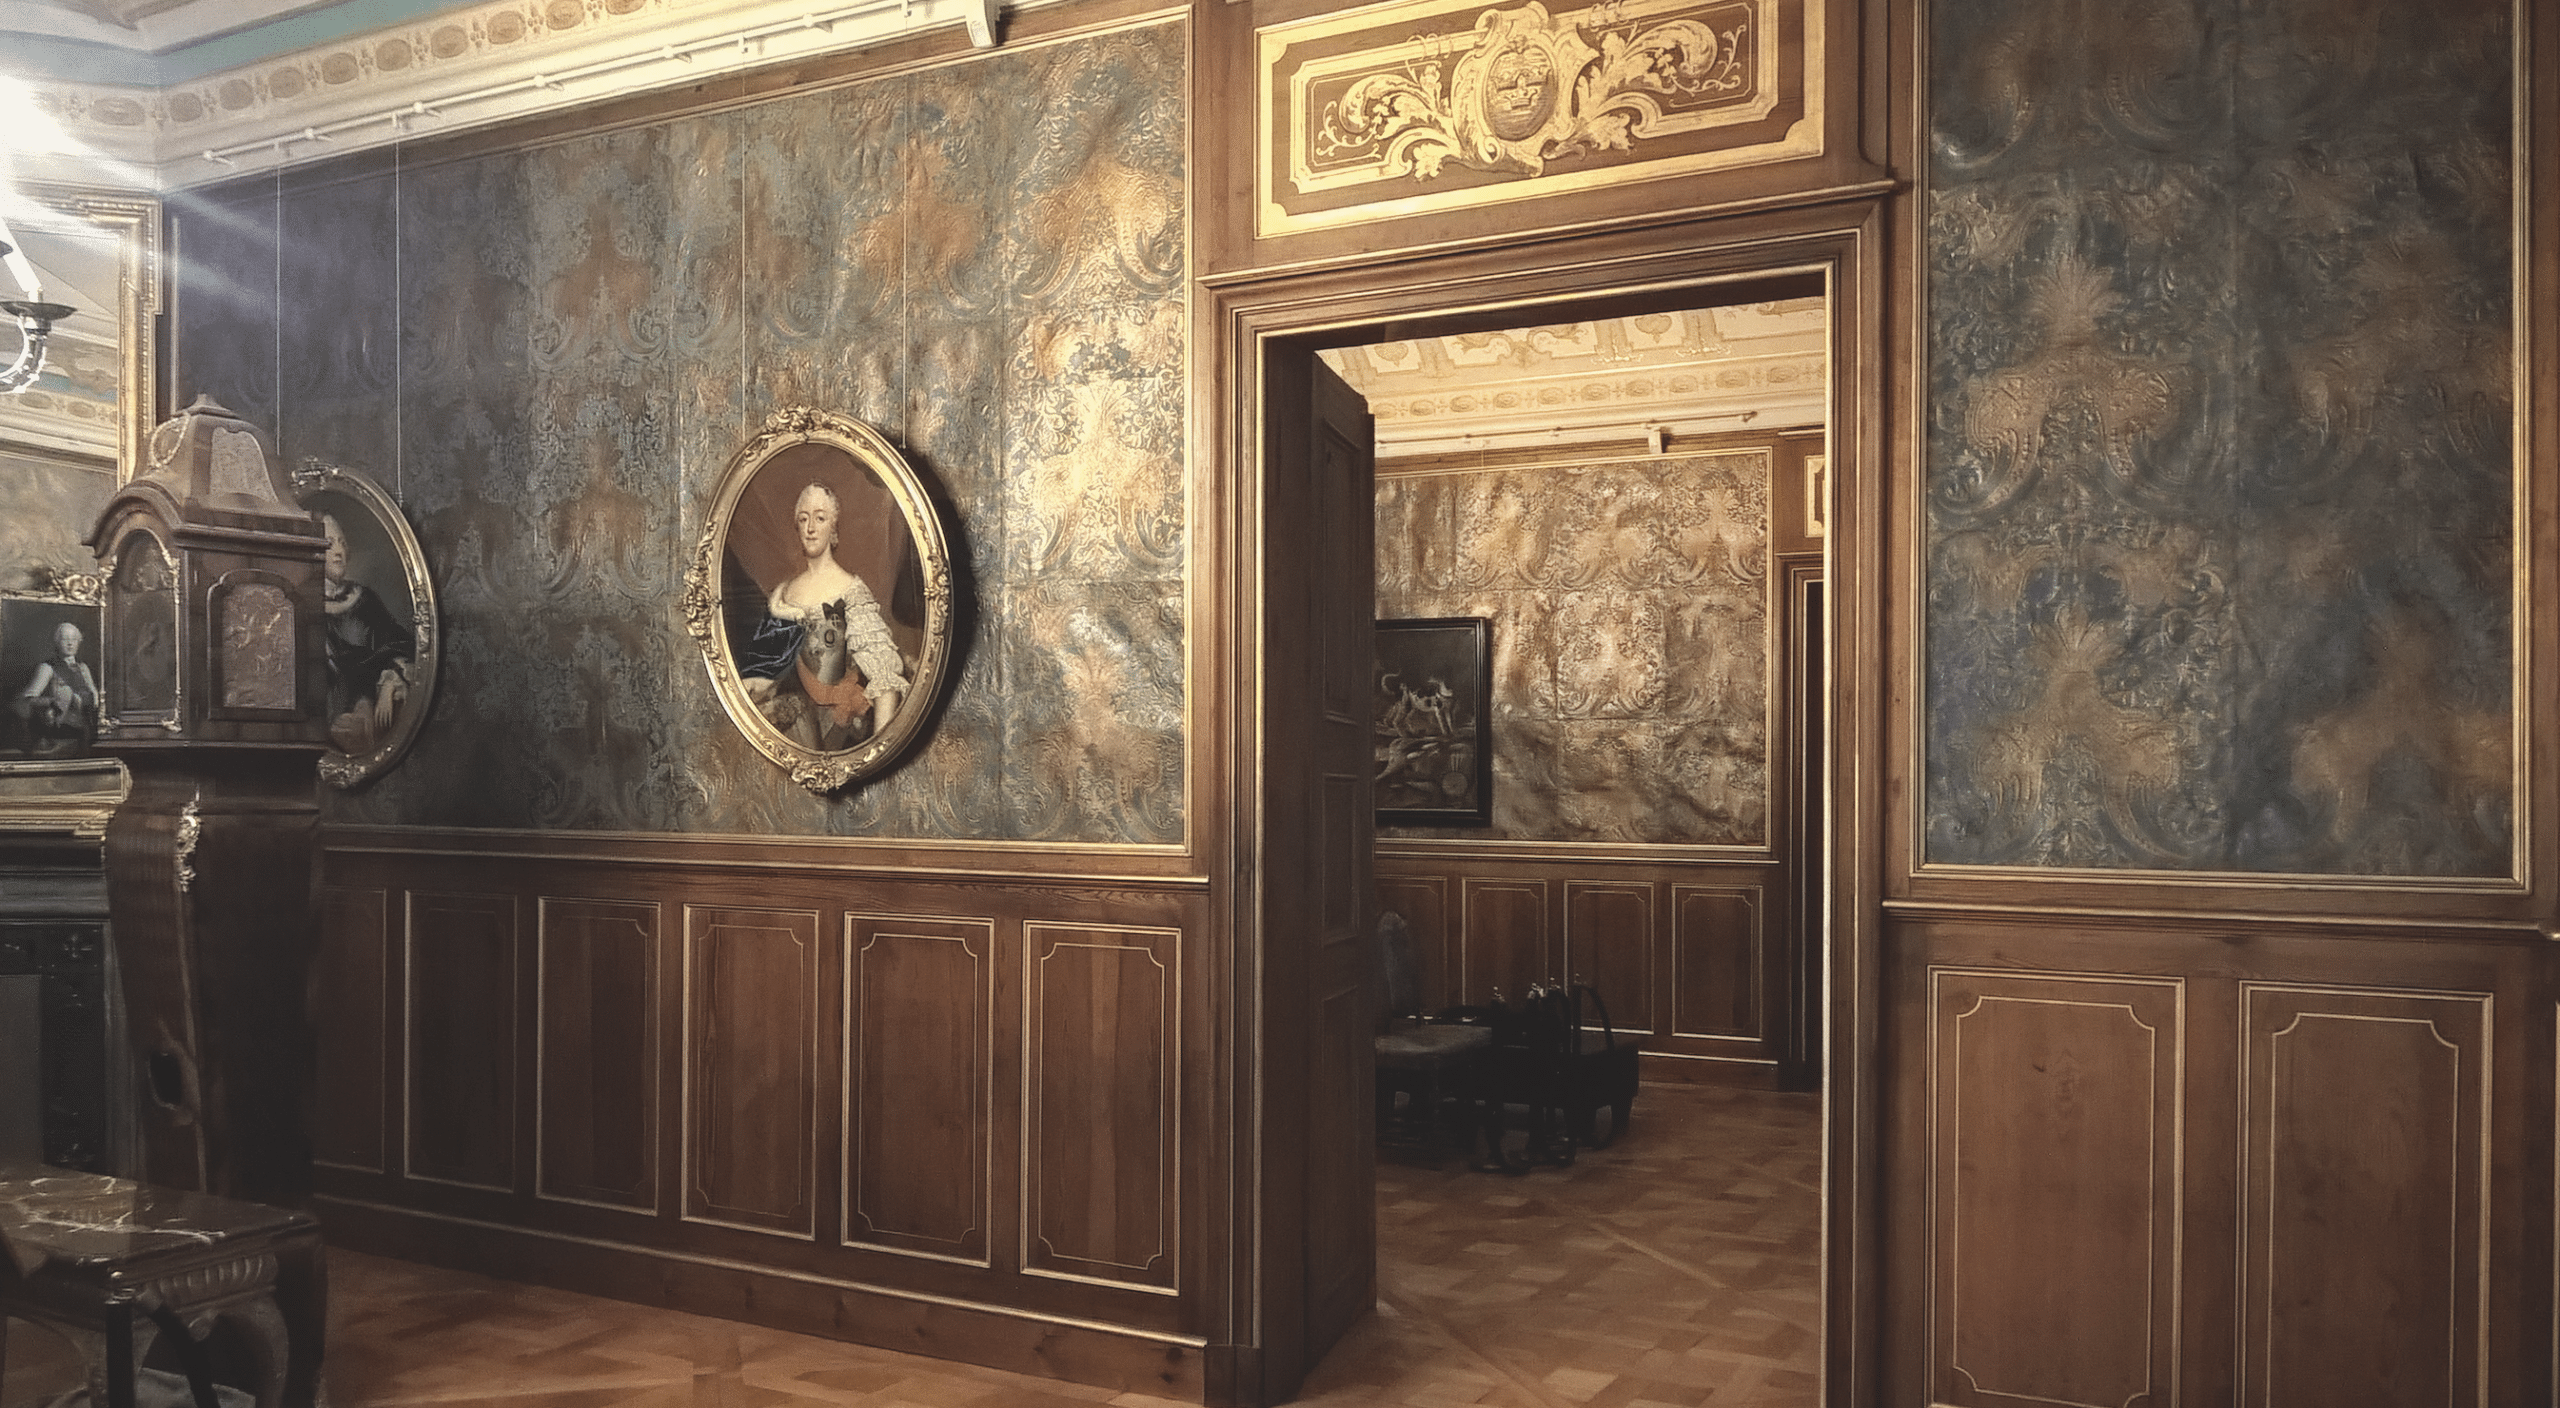 Interieur von Schloss Moritzburg mit den barocken Ledertapeten als Raumausstattung. Foto: Thomas Löther/IDK